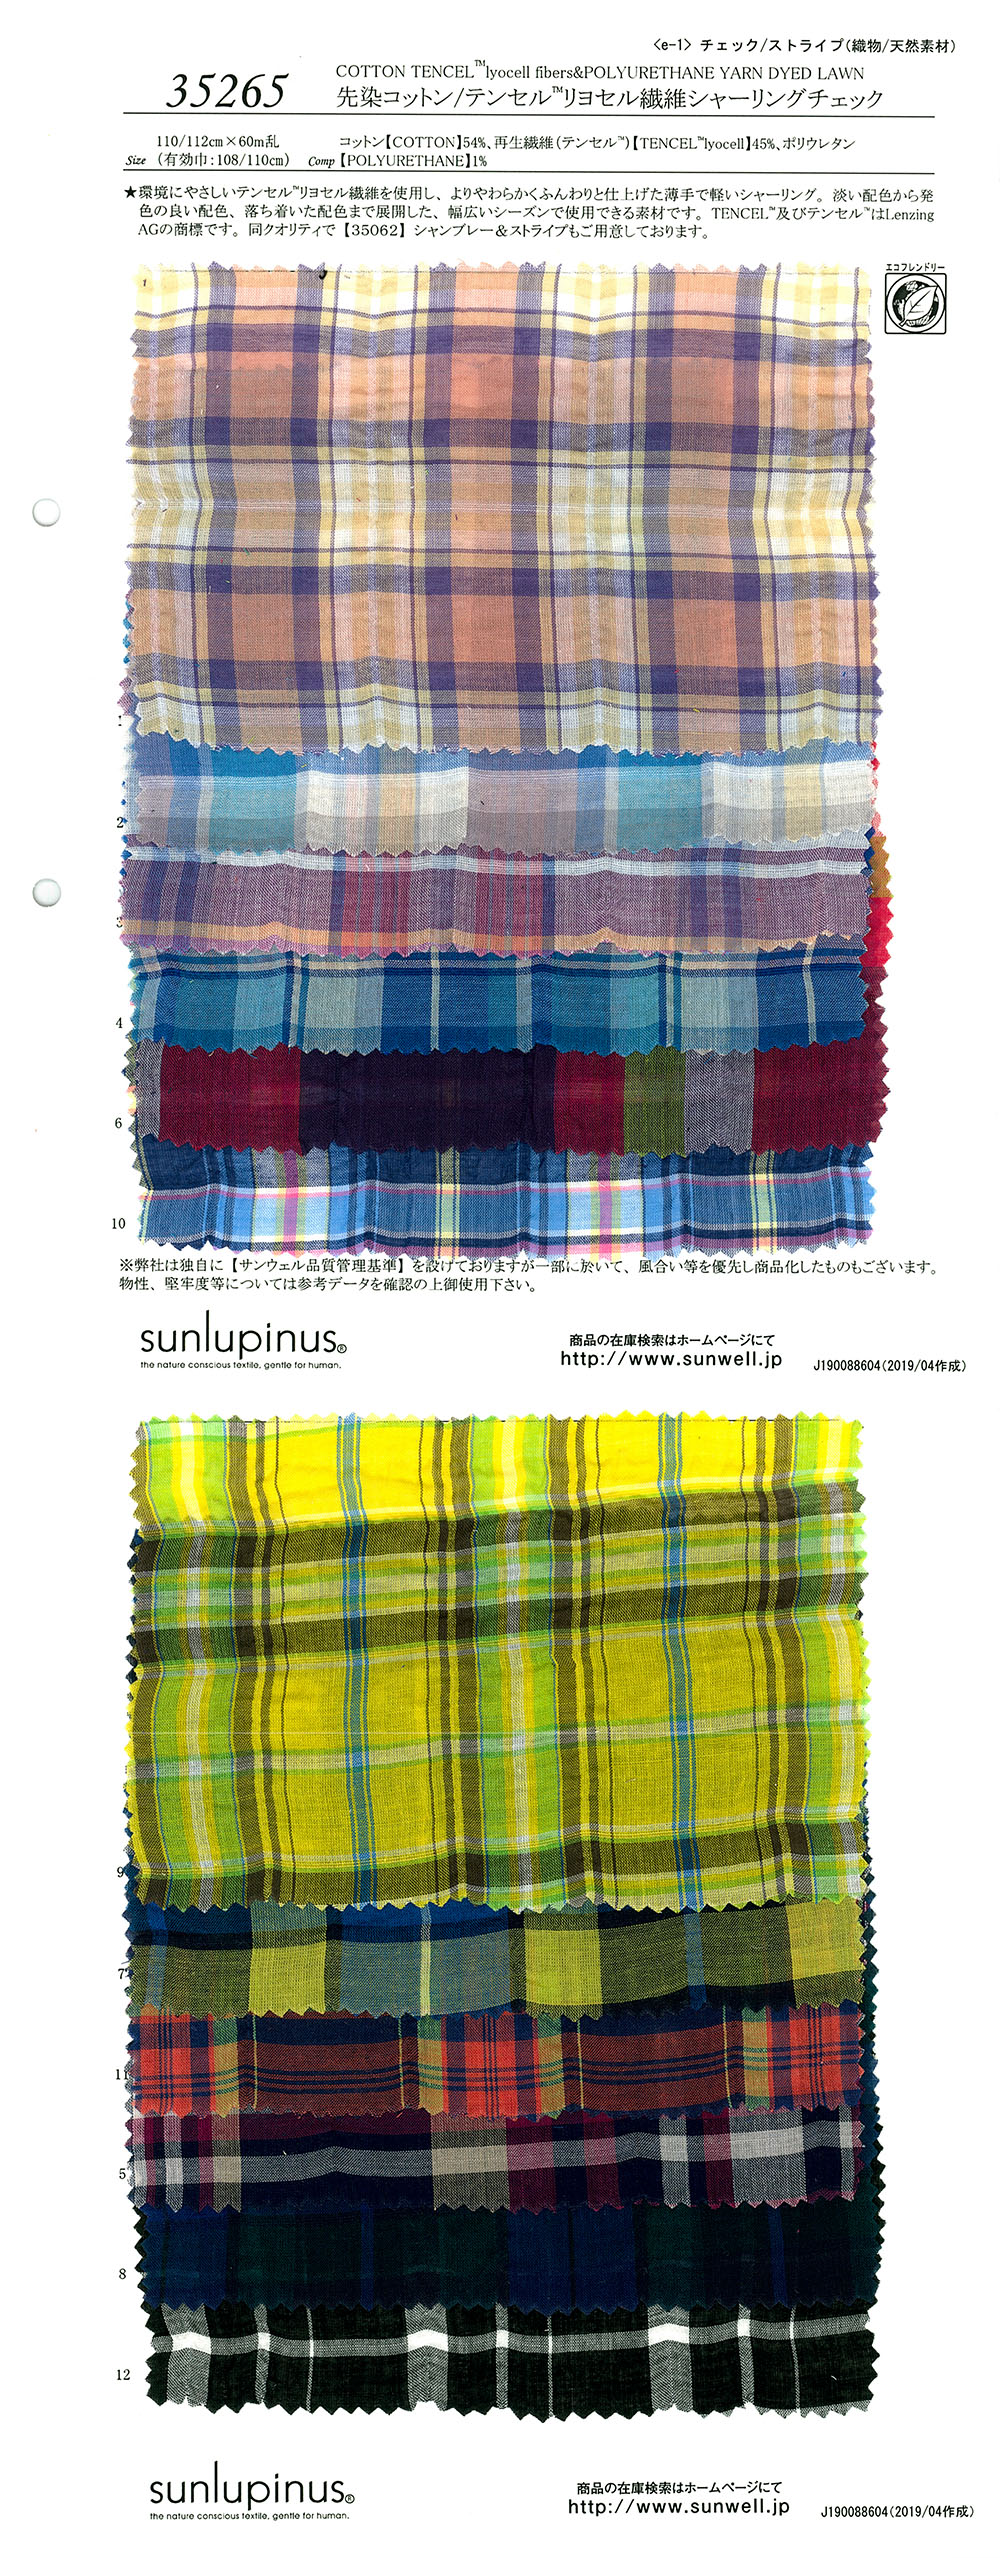 35265 Algodón Teñido En Hilo/Tencel (TM) Fibra De Lyocell Fruncido Cuadros[Fabrica Textil] SUNWELL